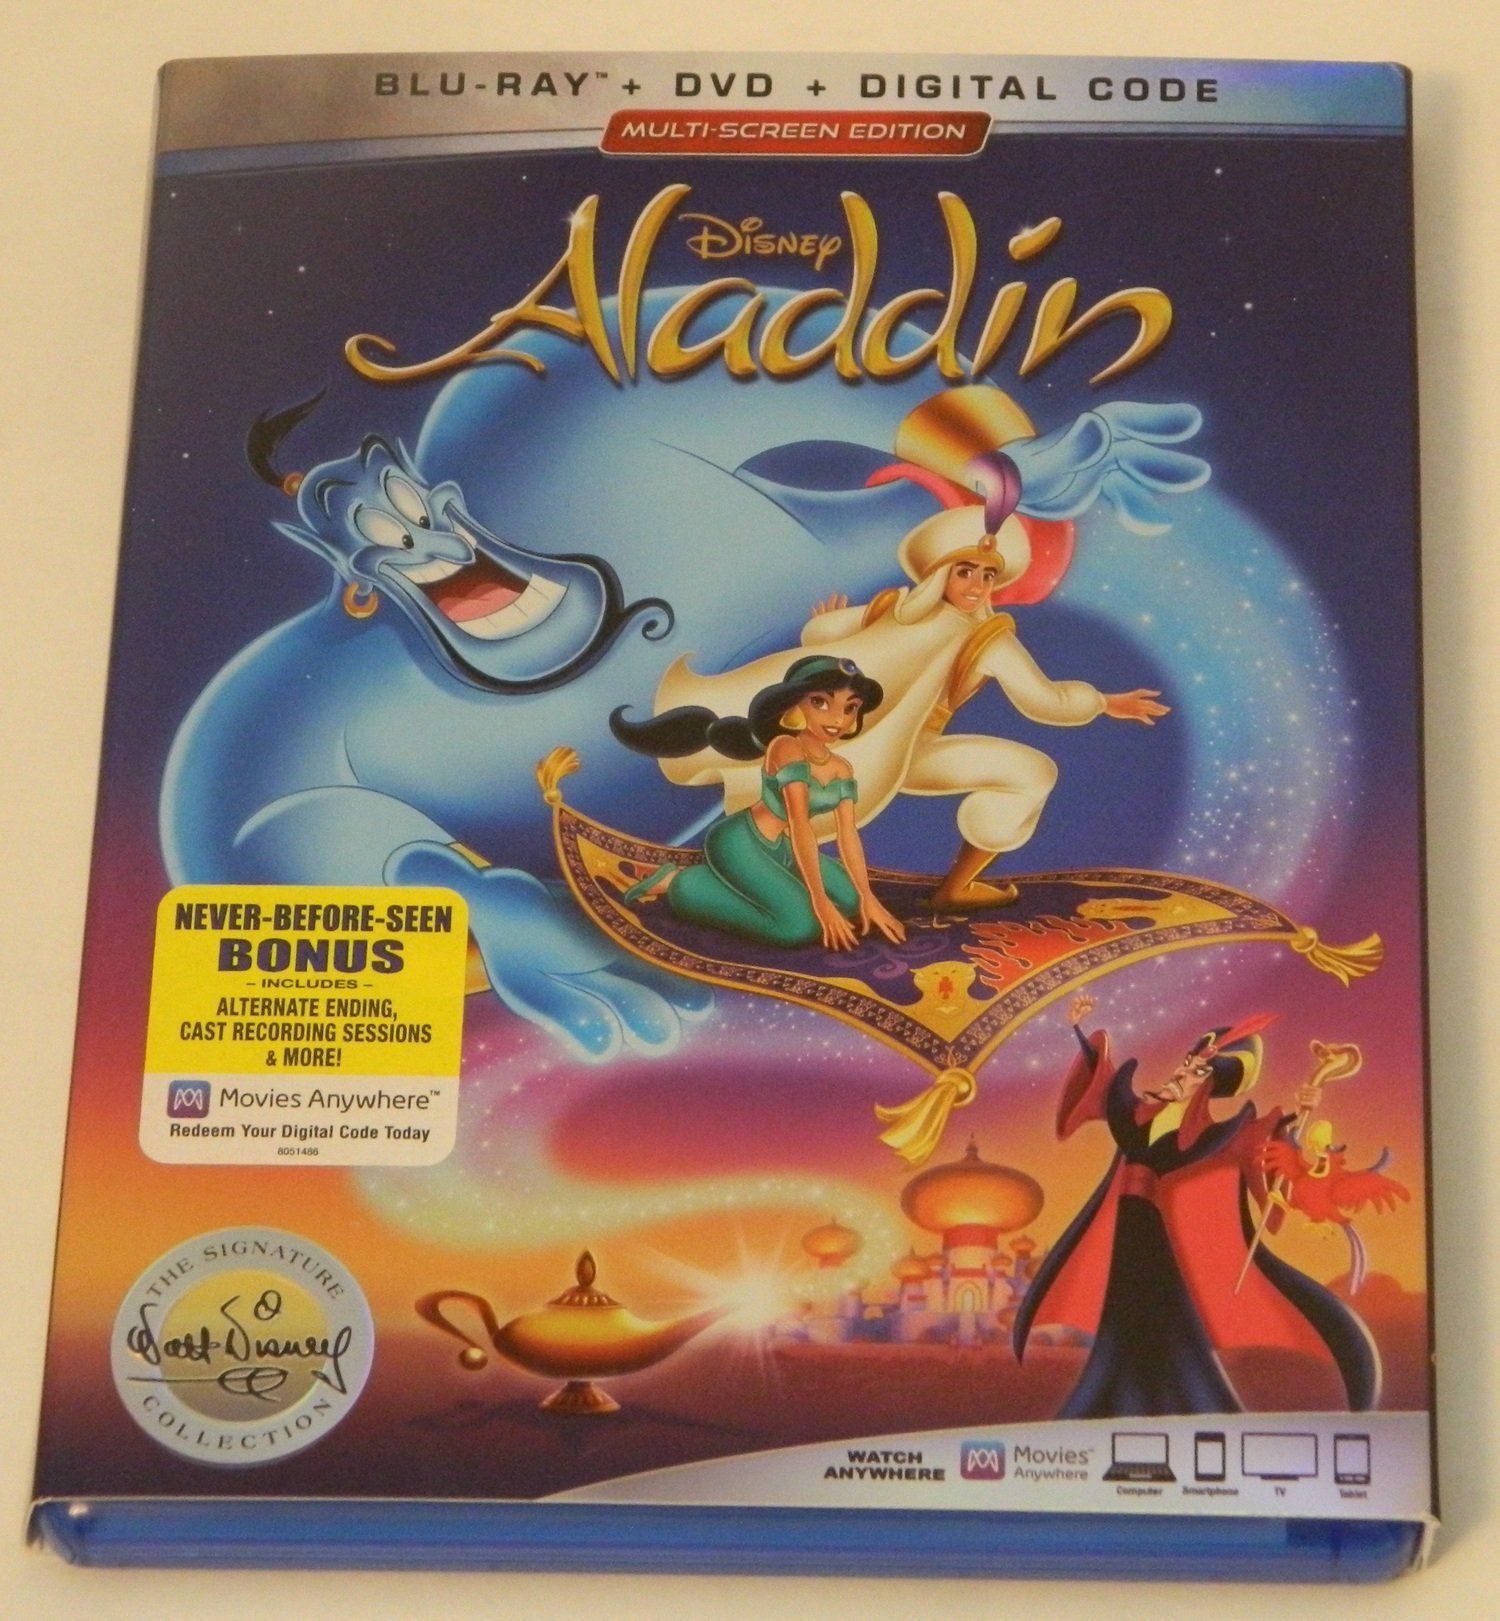 Aladdin (1992): Walt Disney Signature Collection Blu-ray Review